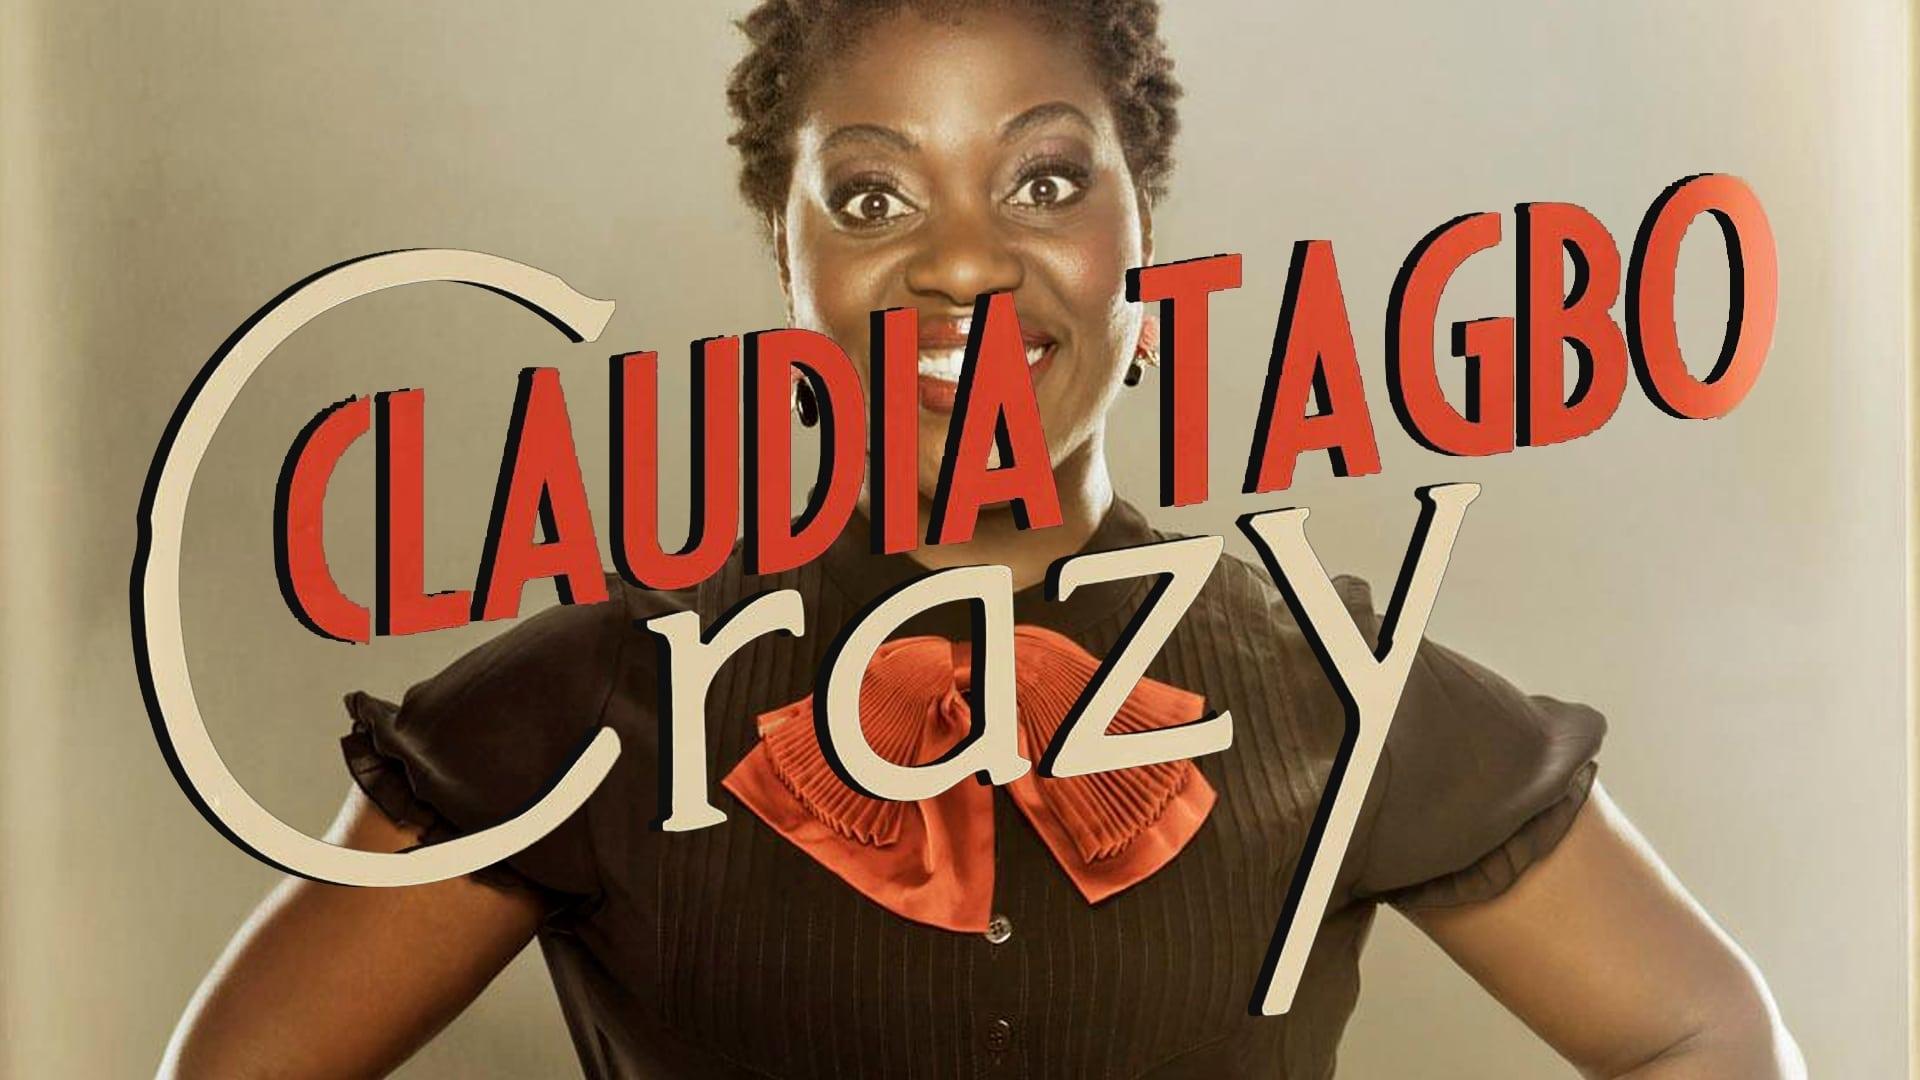 Claudia Tagbo - Crazy backdrop